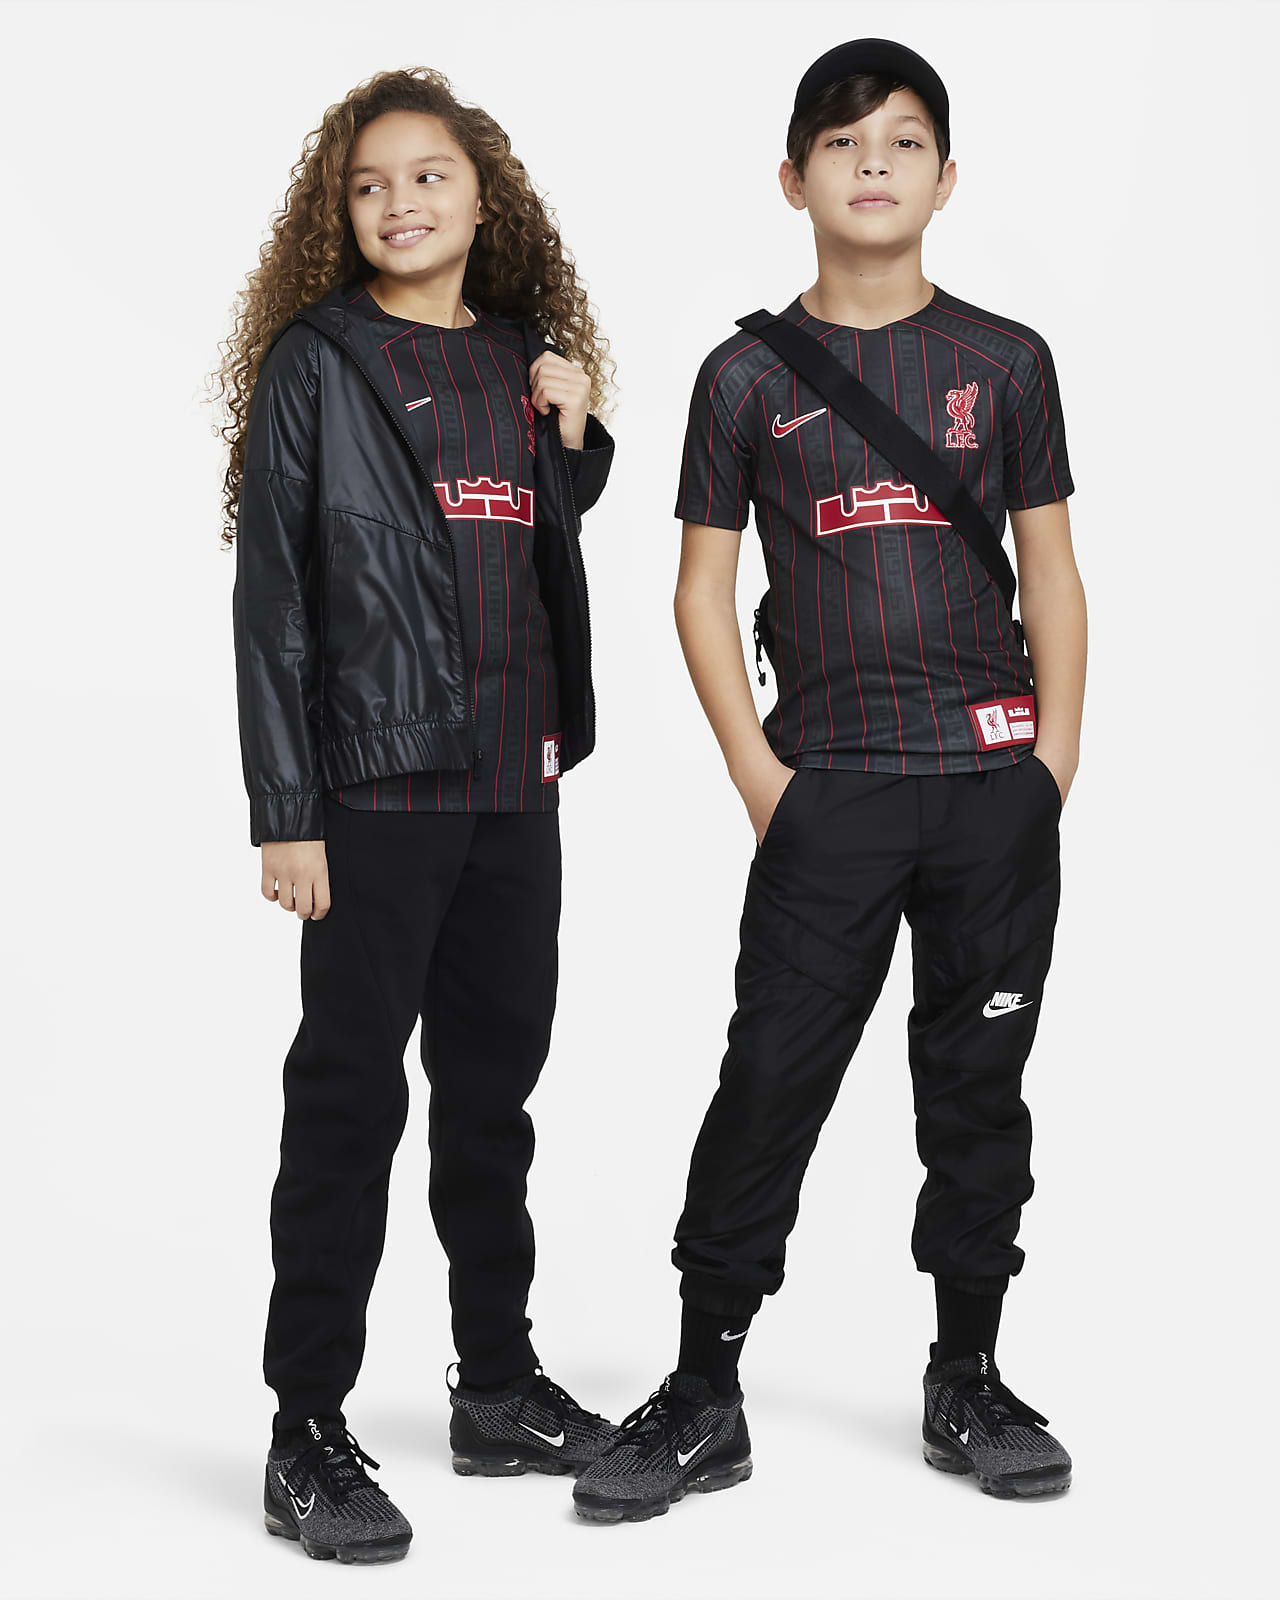 Nike Lebron x Liverpool Collection